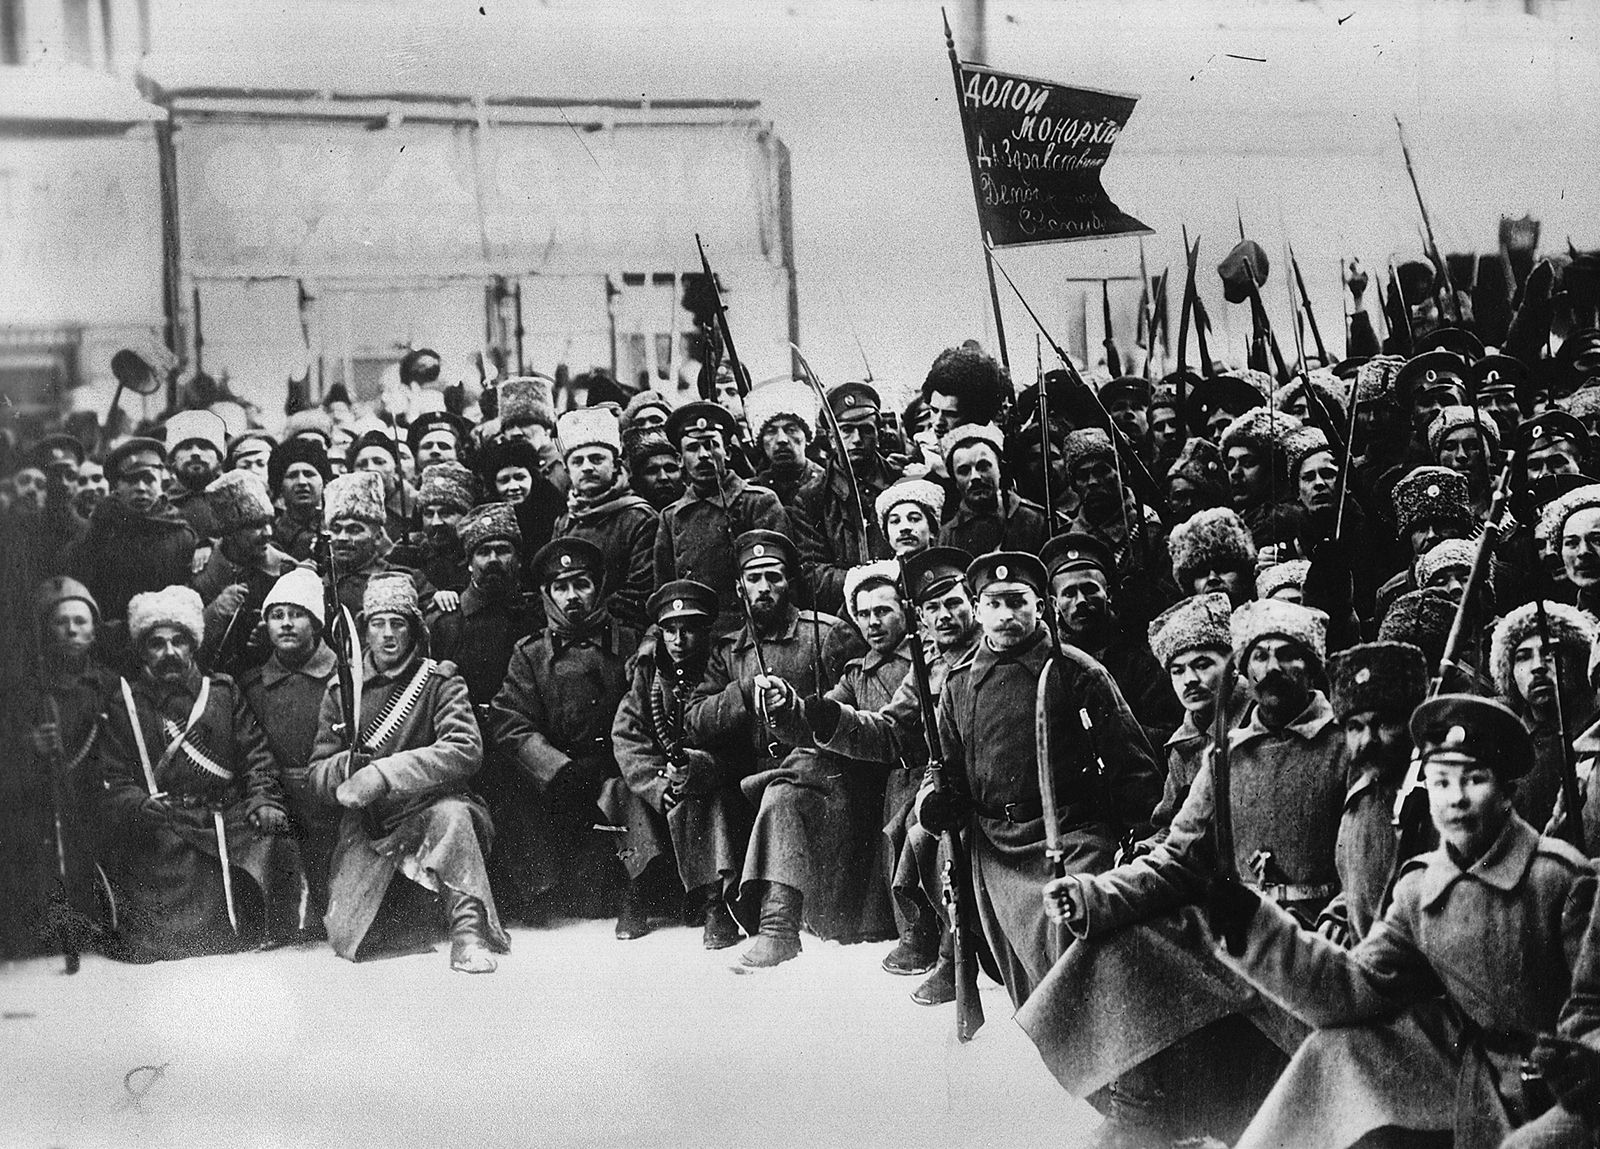 War Communism, 1917-1920 | The Russian Revolution of 1917